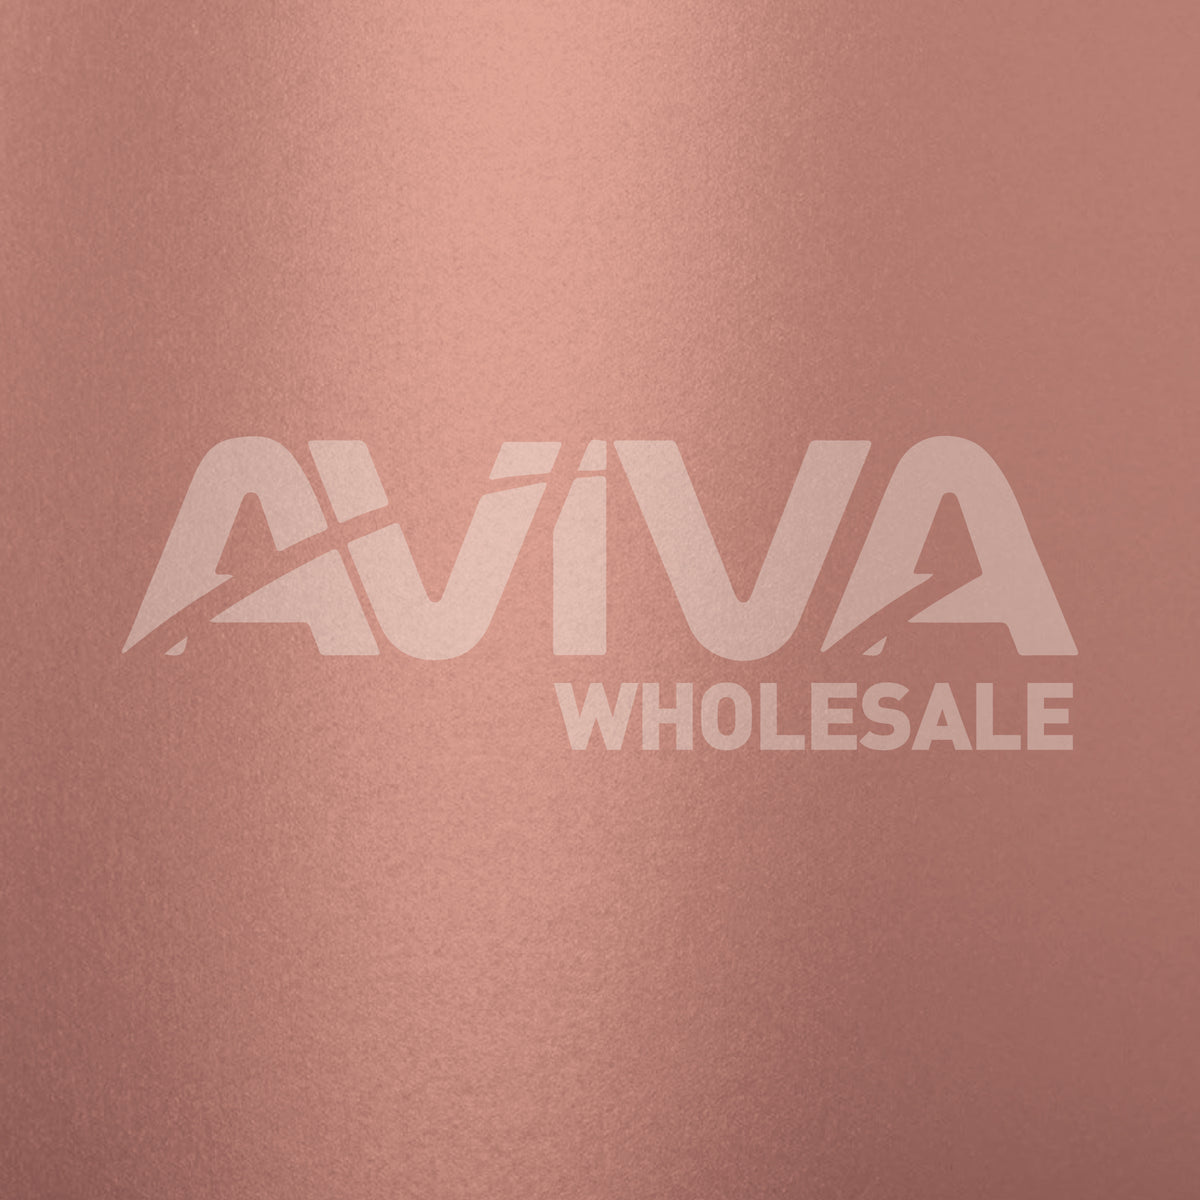 Ultra Flex Shimmer Silver 20” wide Heat TRANSFER Vinyl for T-Shirt